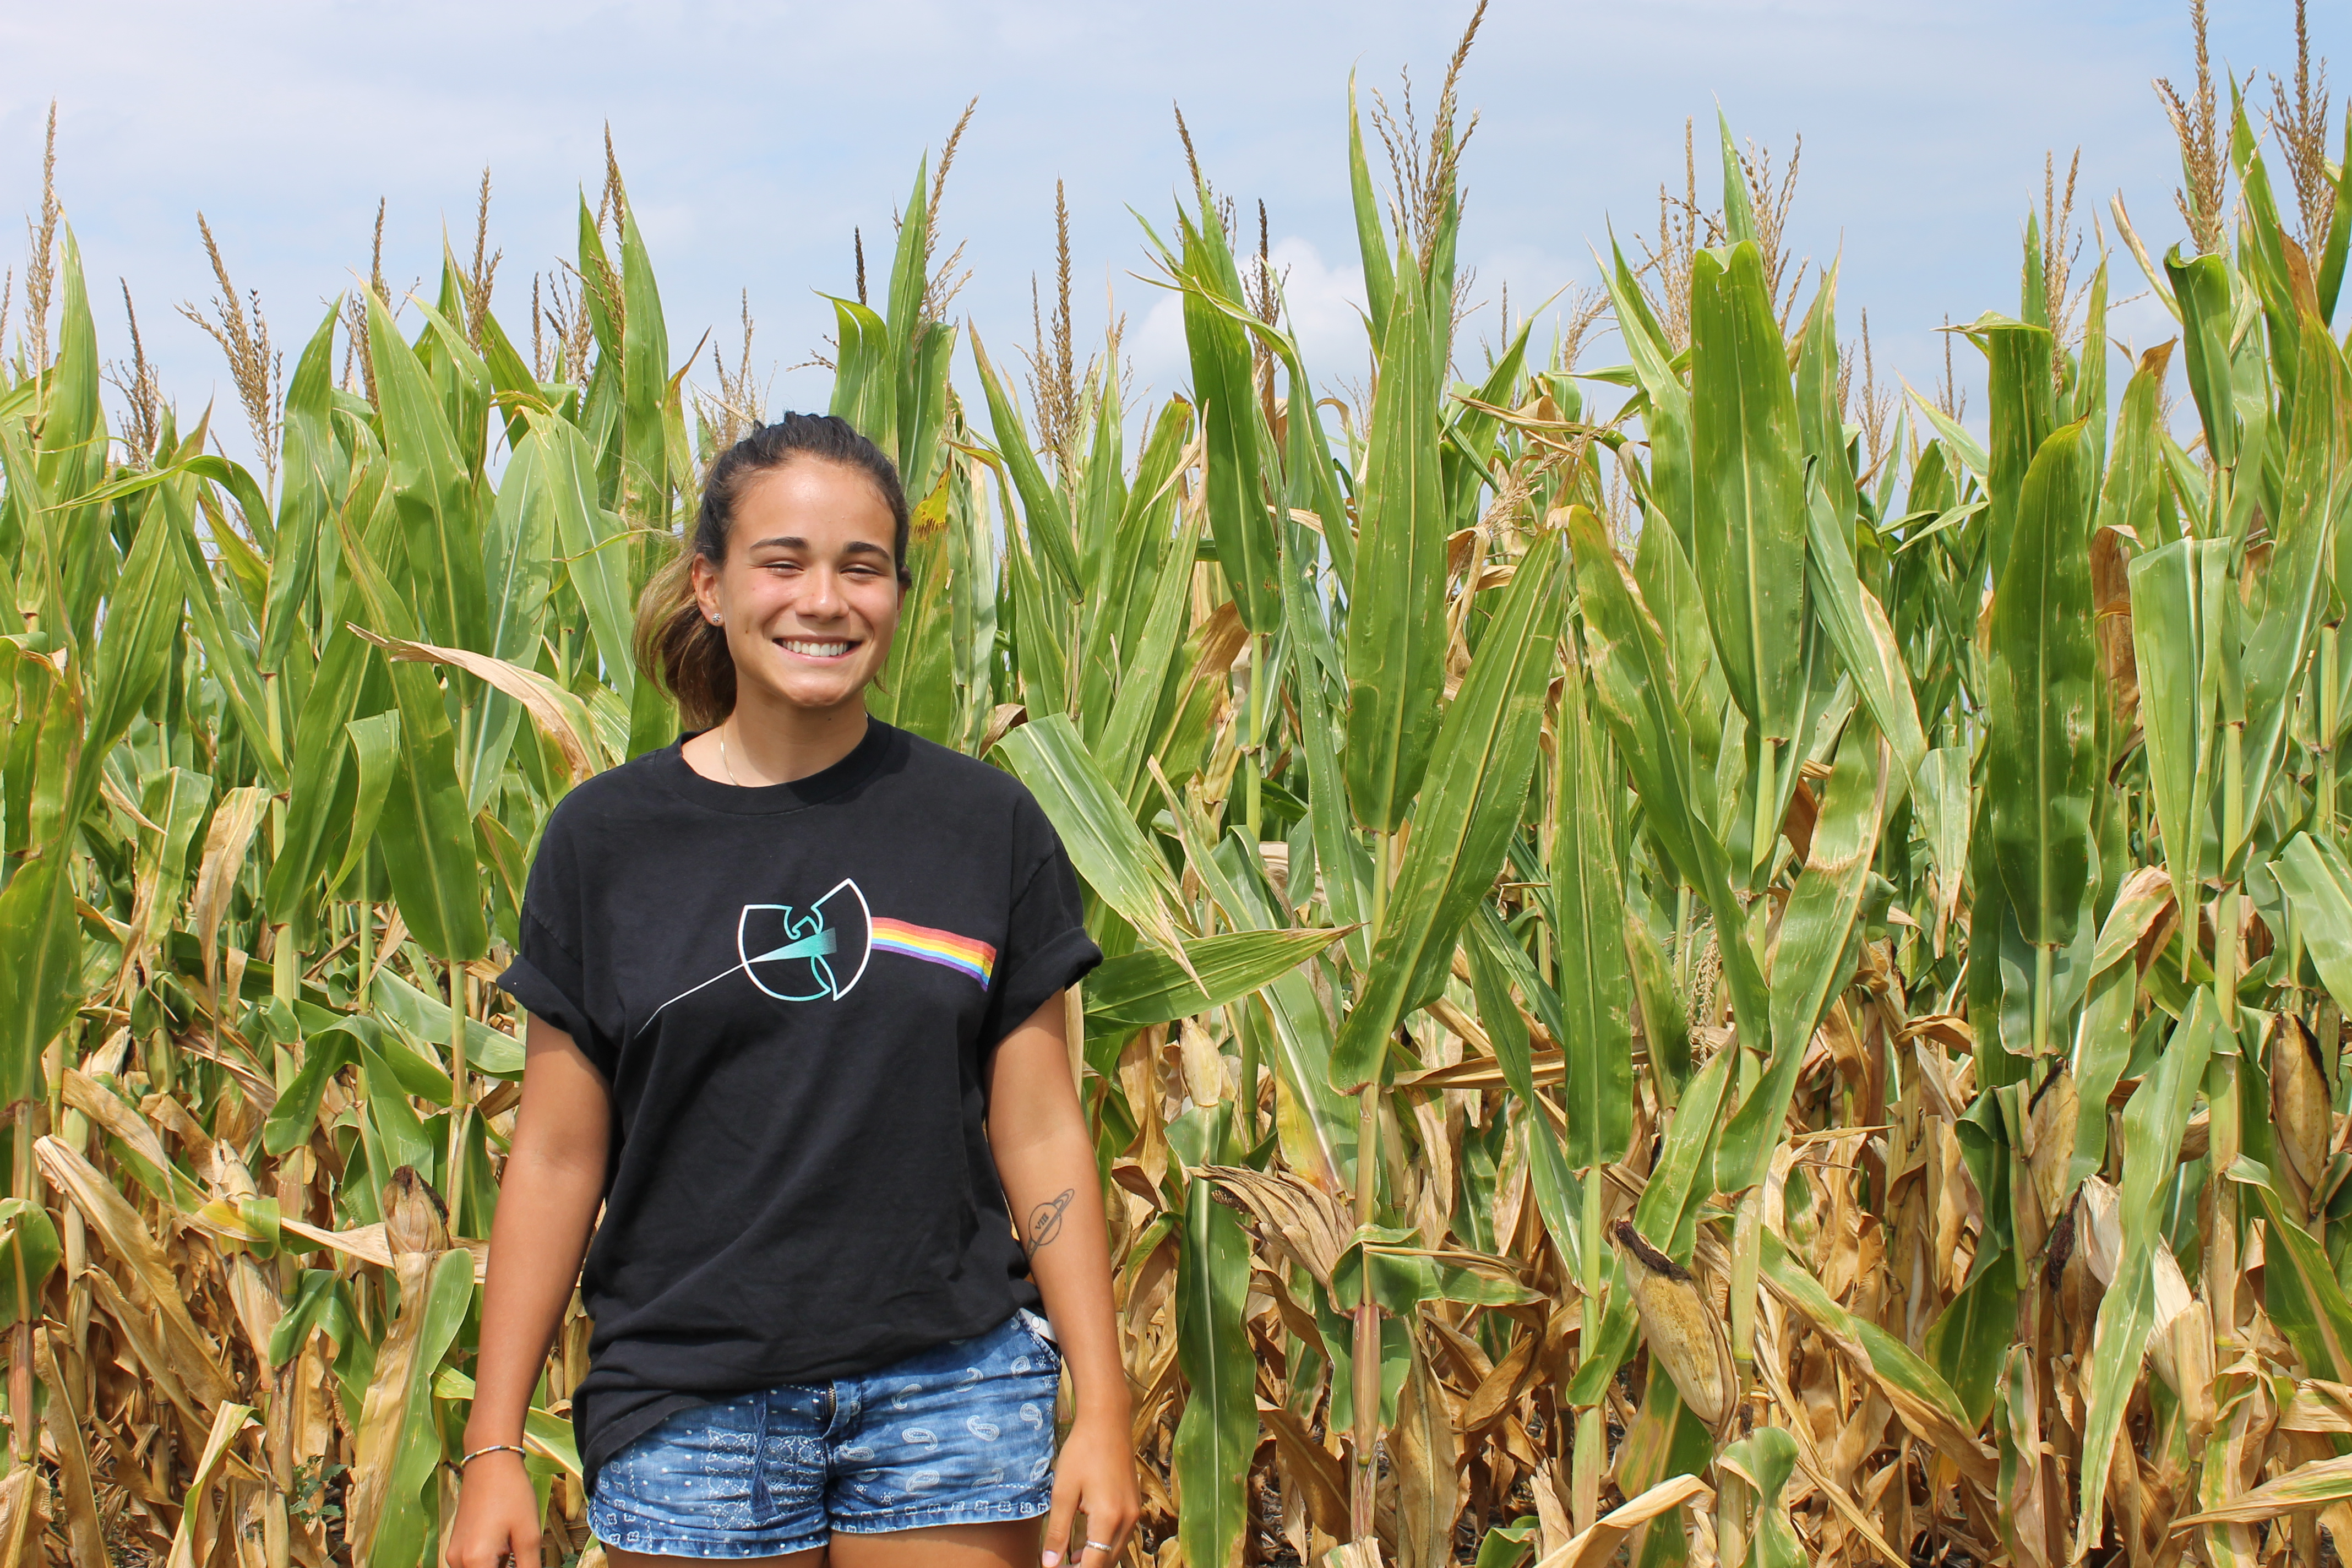 Dani posing in front of miles of corn fields. 